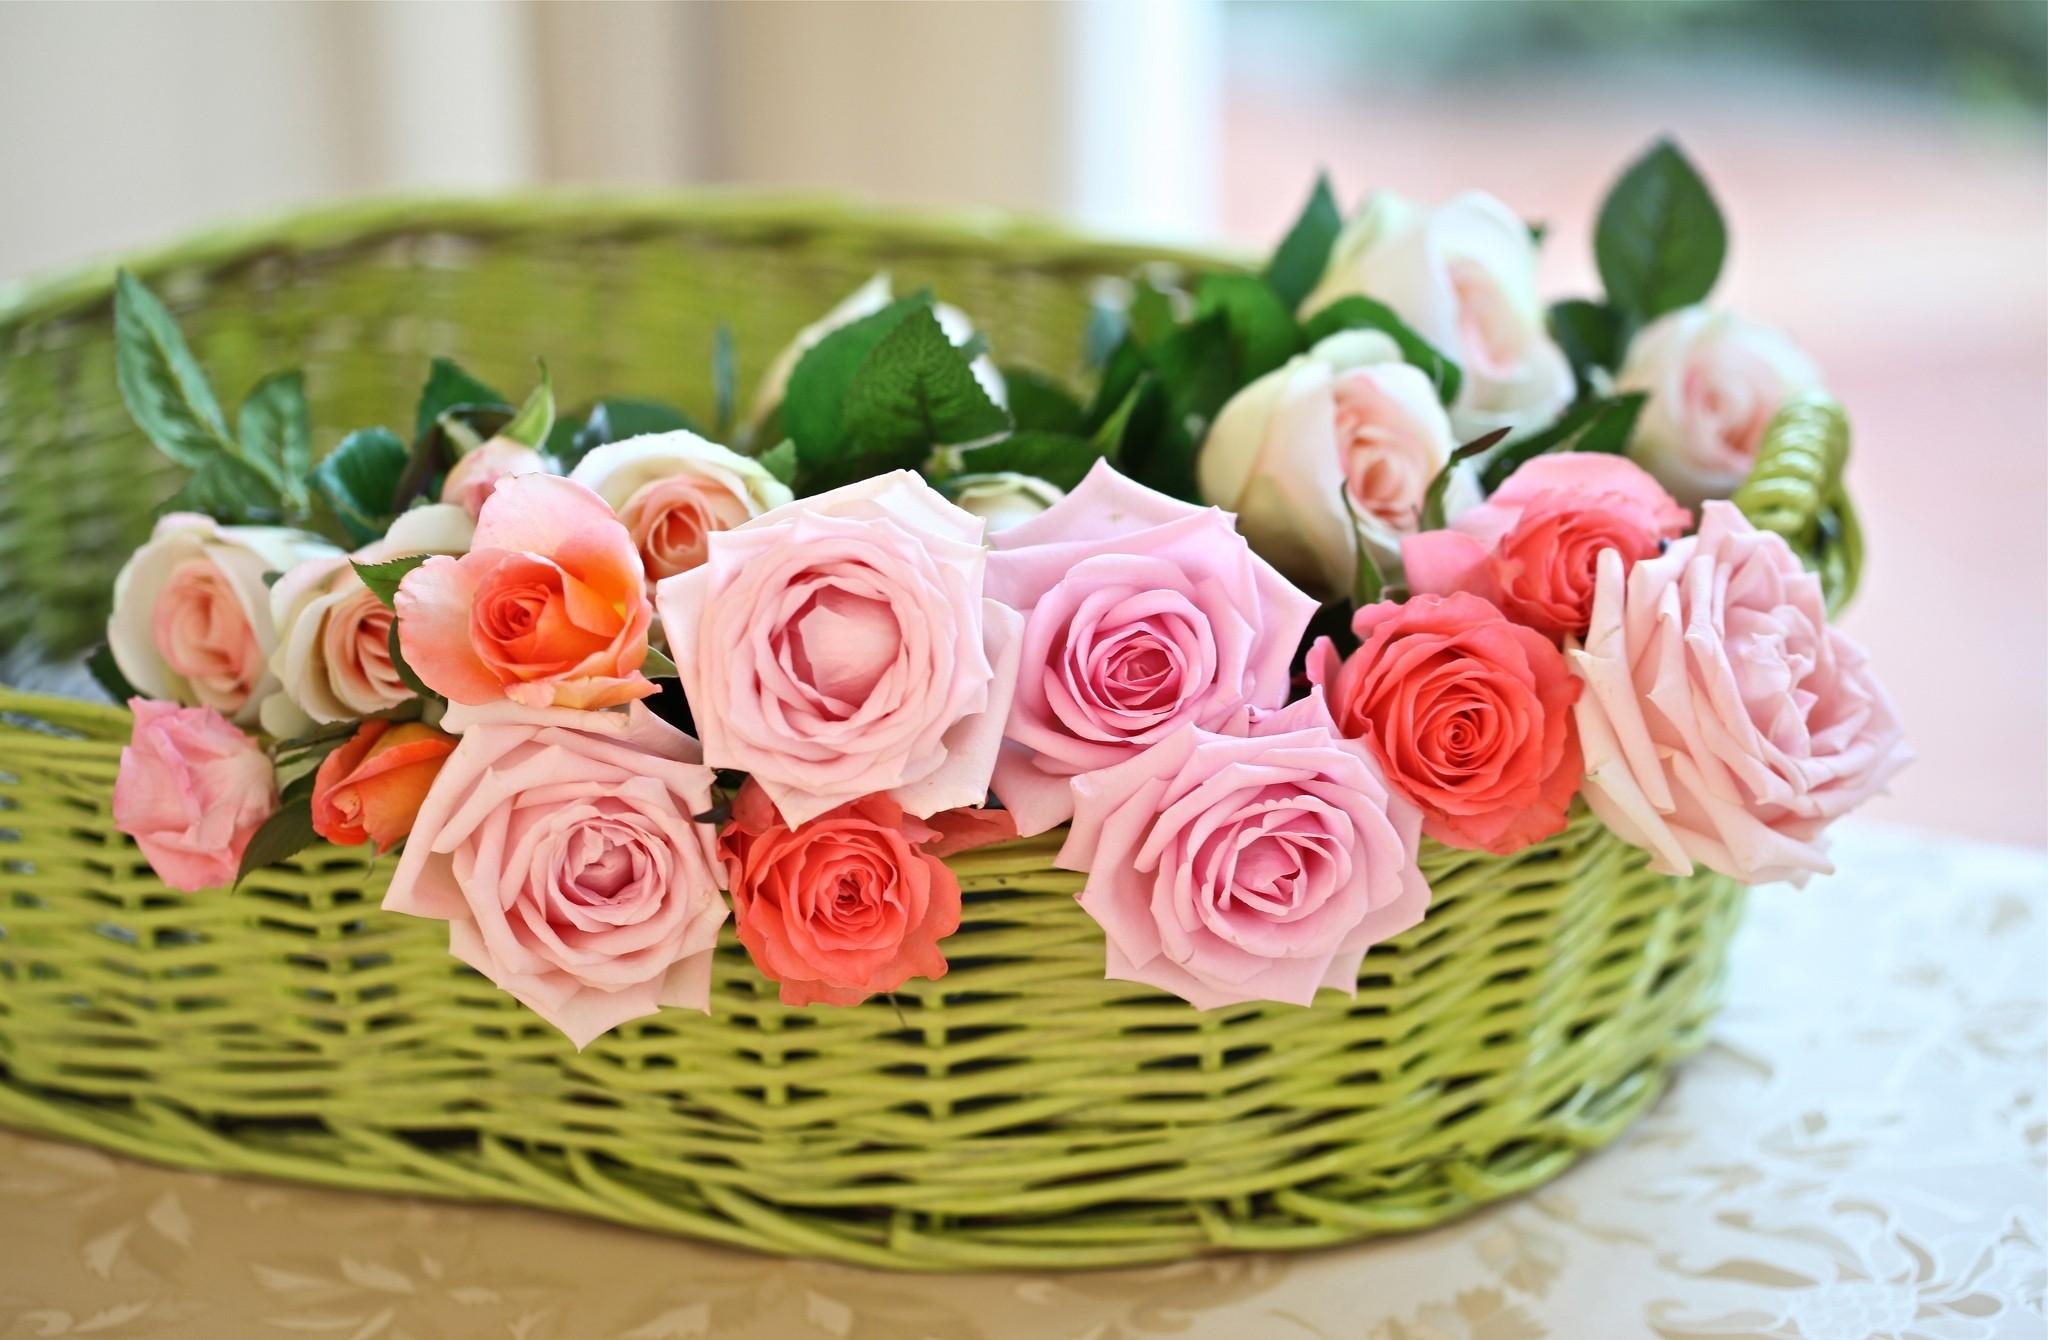 Download PC Wallpaper tenderness, flowers, rose flower, rose, basket